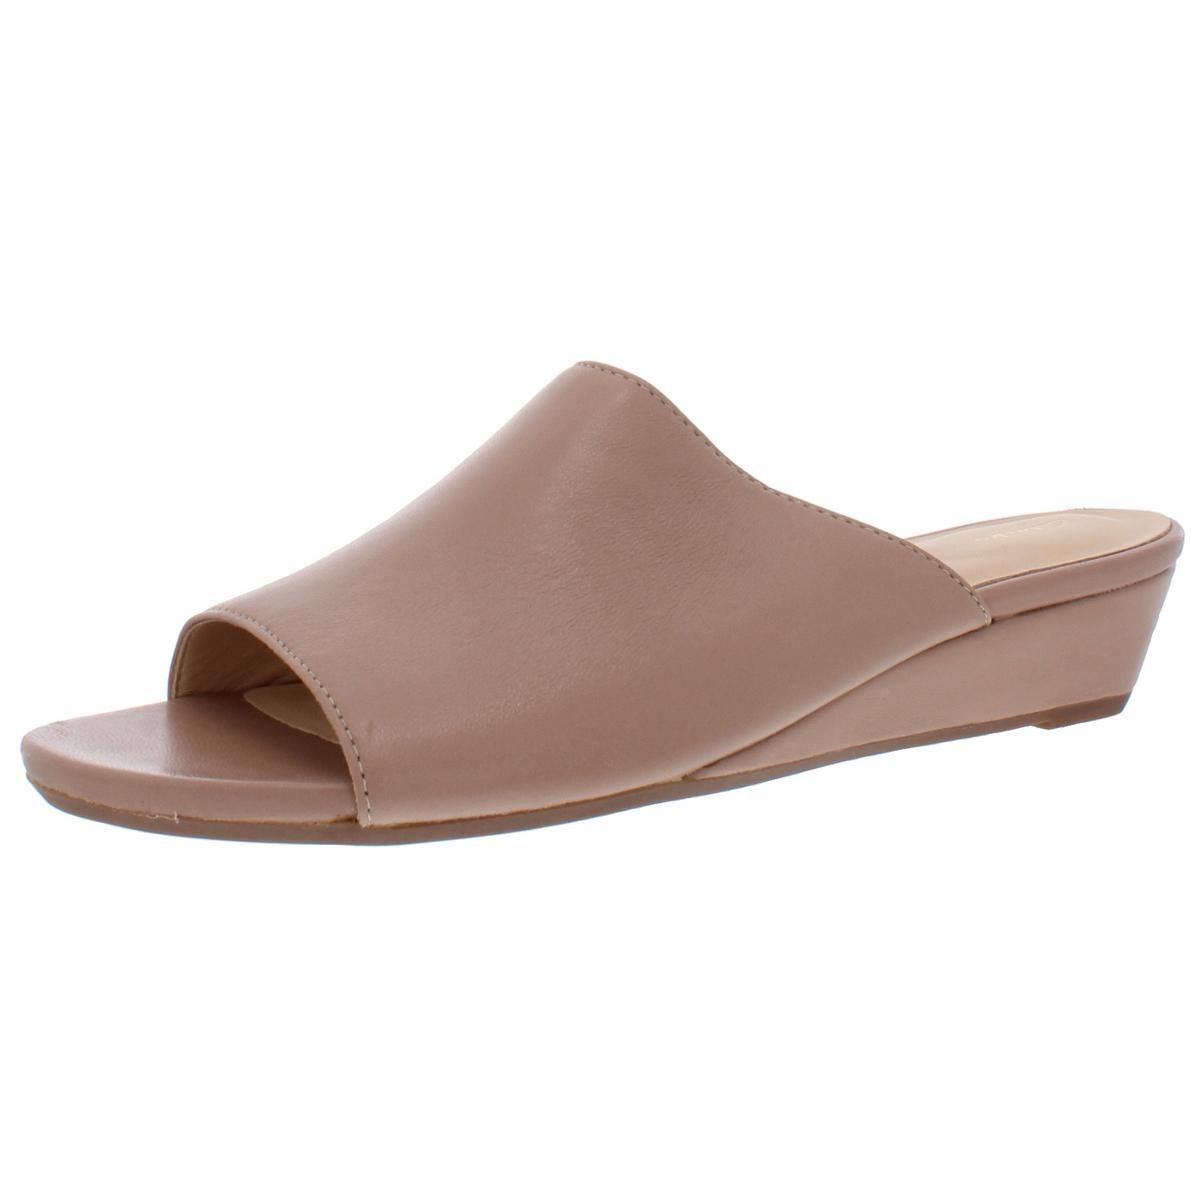 Clarks Womens Parram Waltz Beige Wedge Sandals Shoes 7 Medium (B,M ...